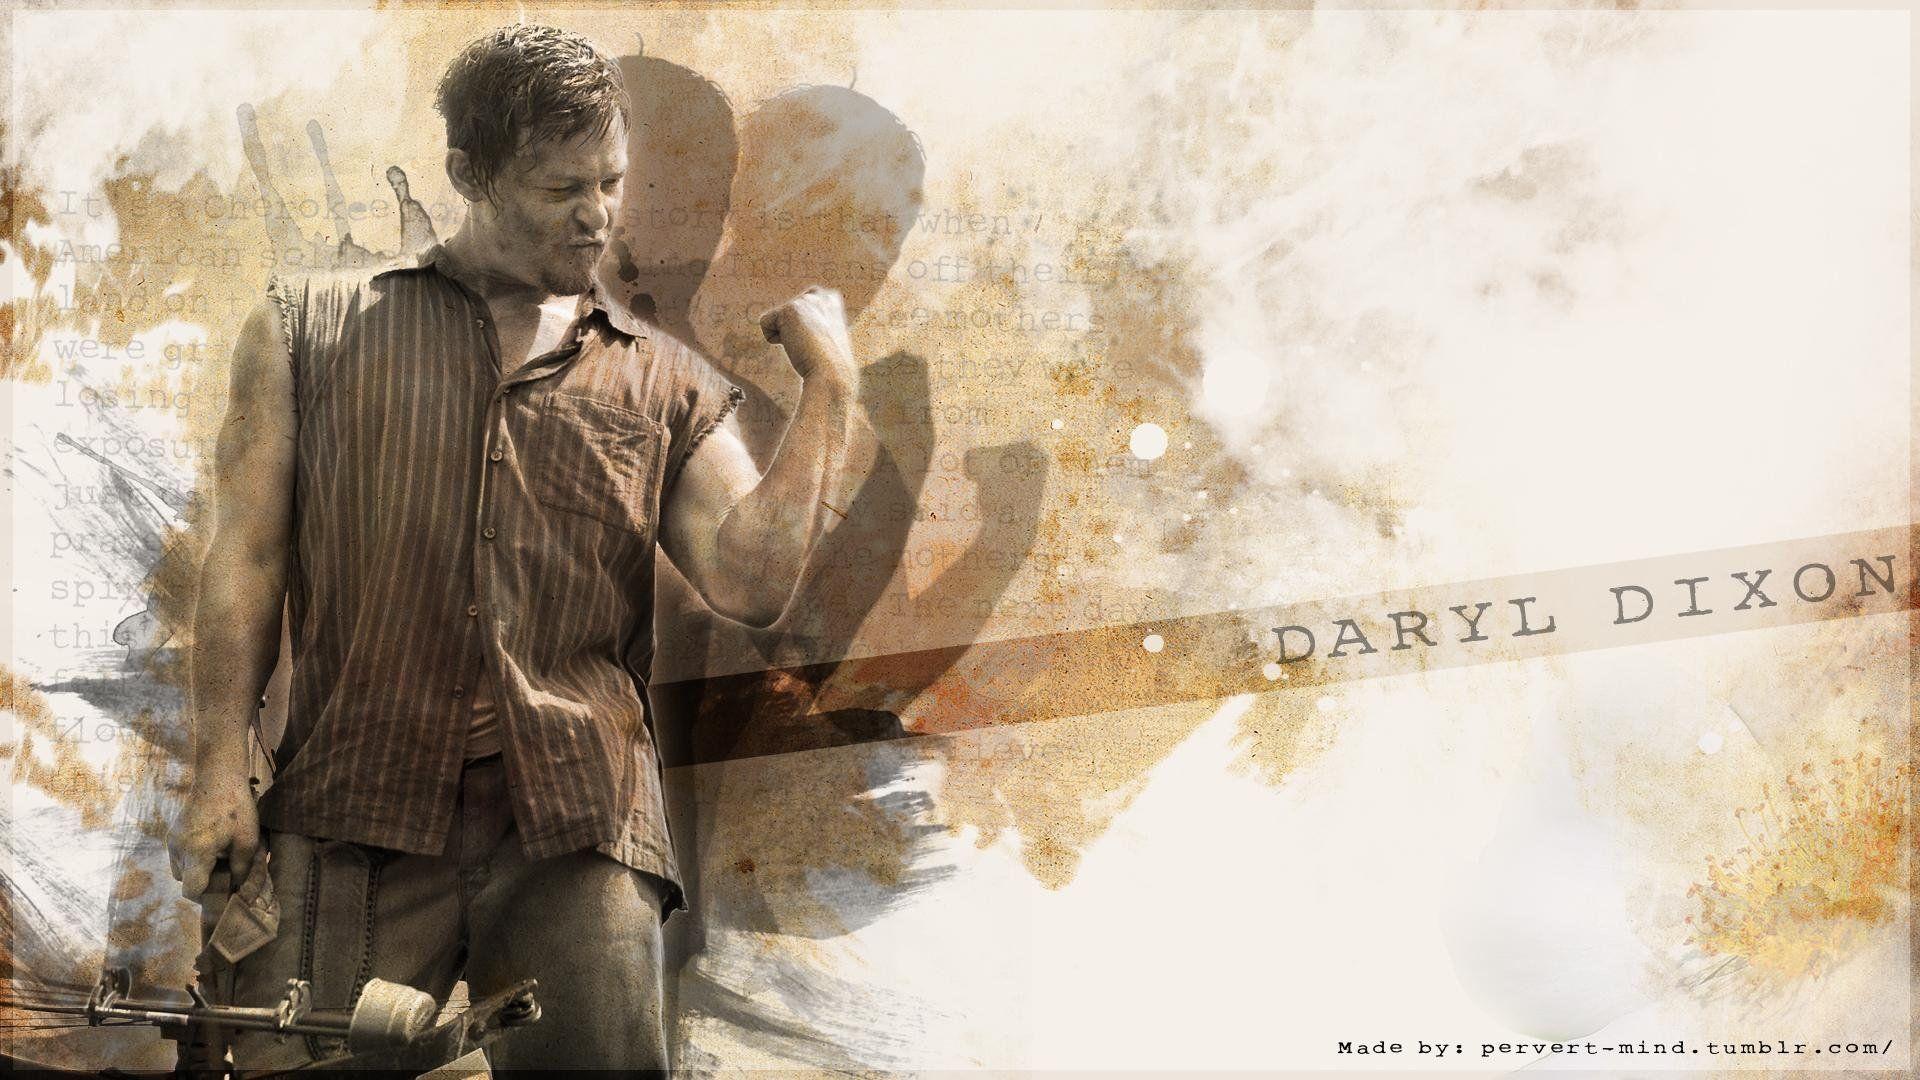 Walking Dead Daryl Dixon Wallpaper